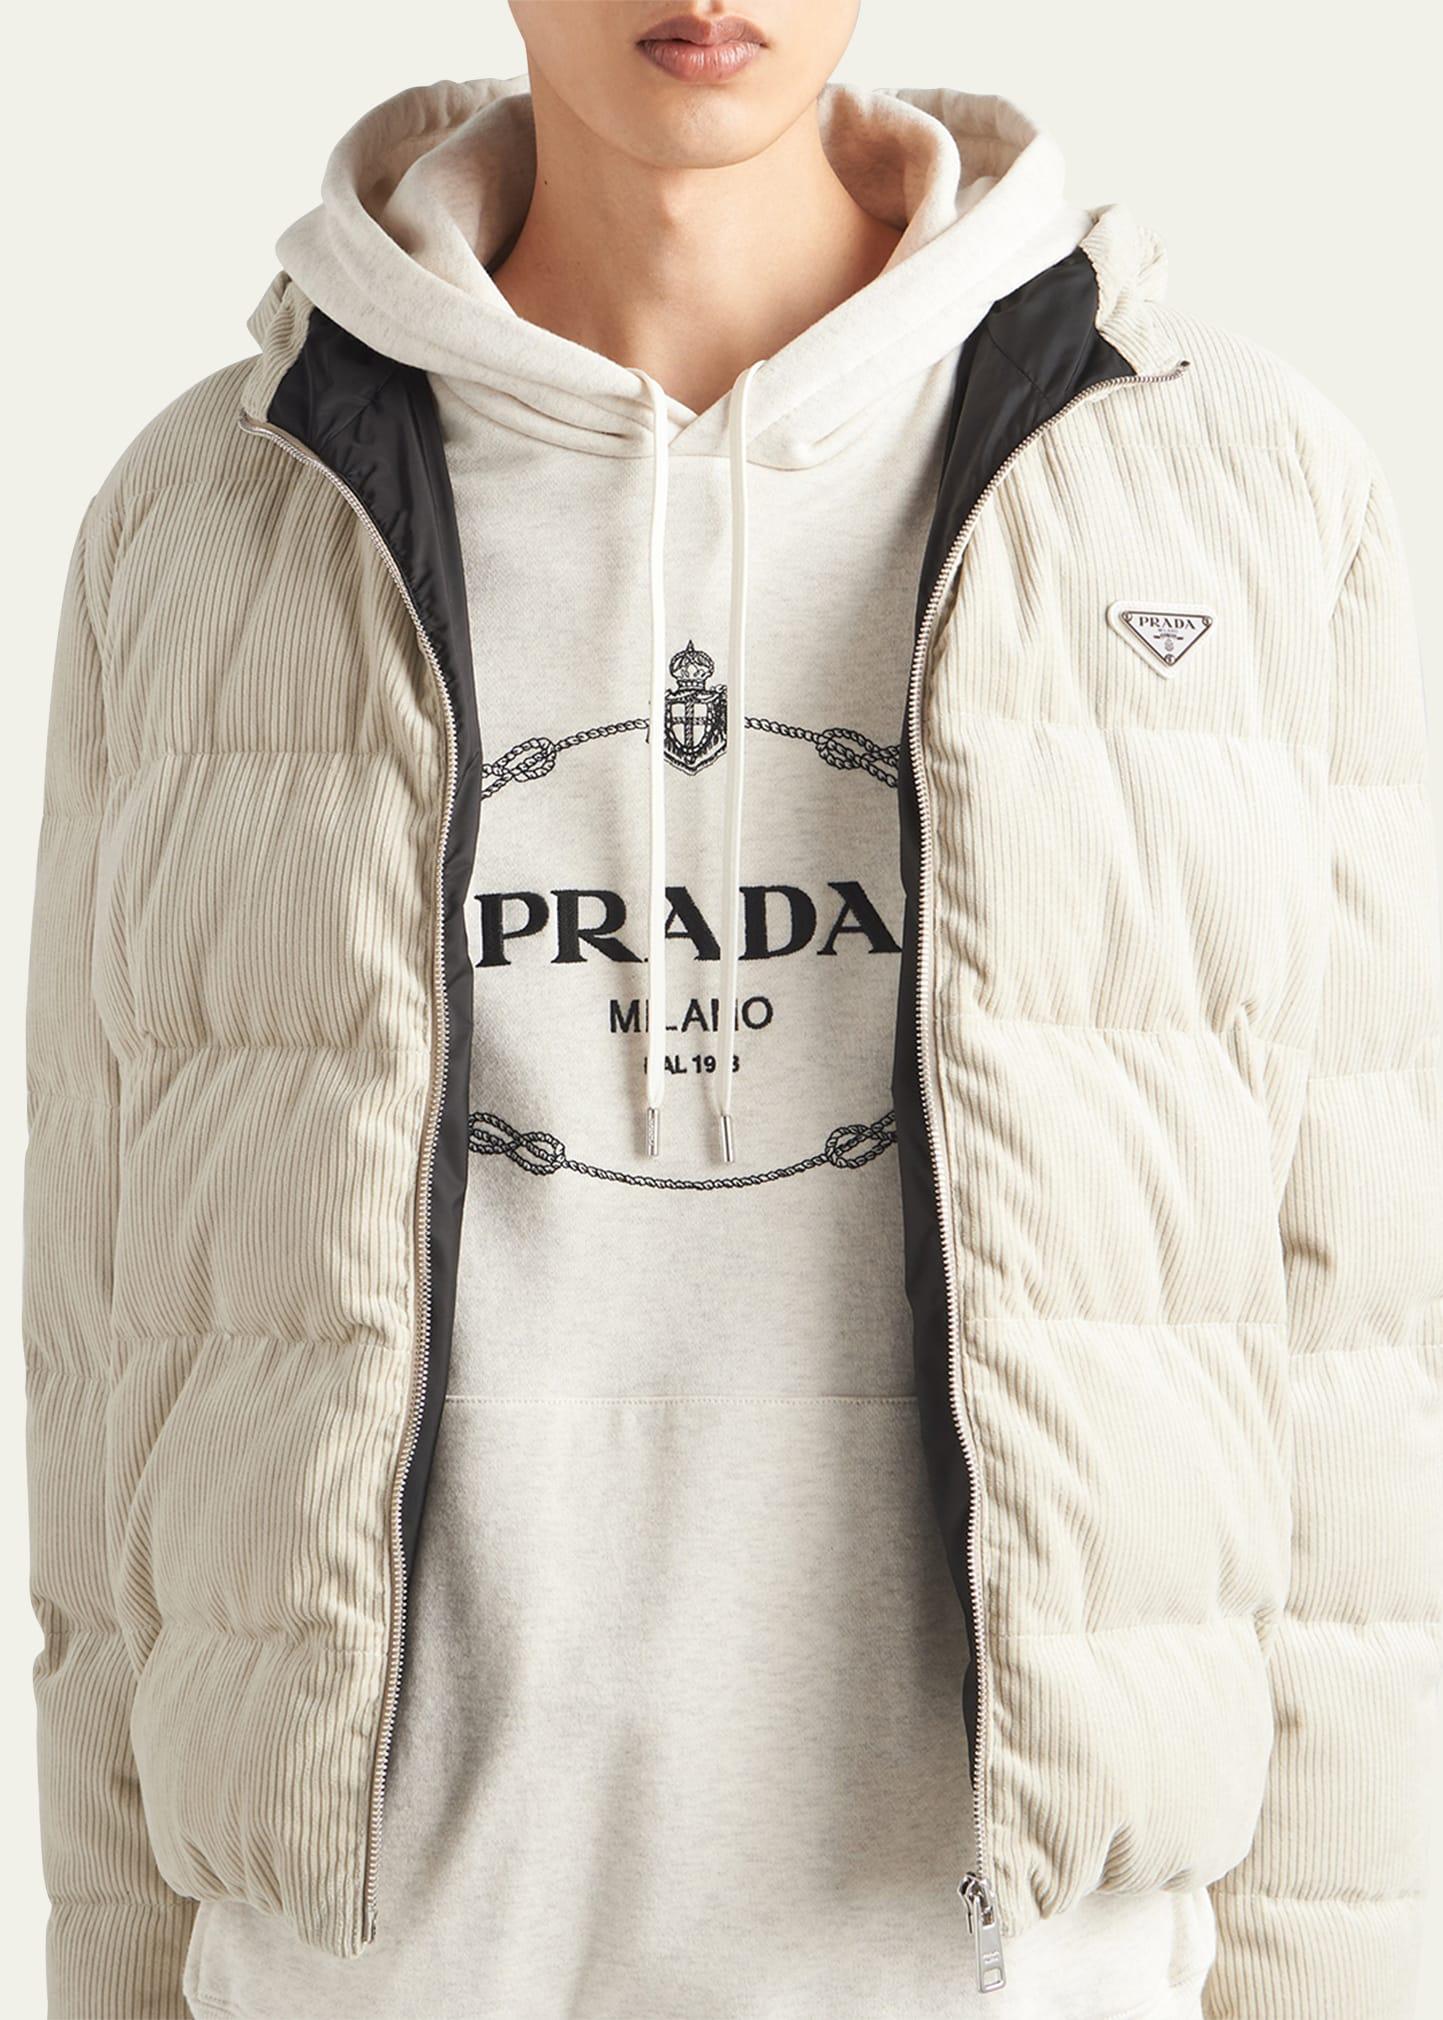 Prada Felpa Hooded Sweatshirt in Natural for Men | Lyst